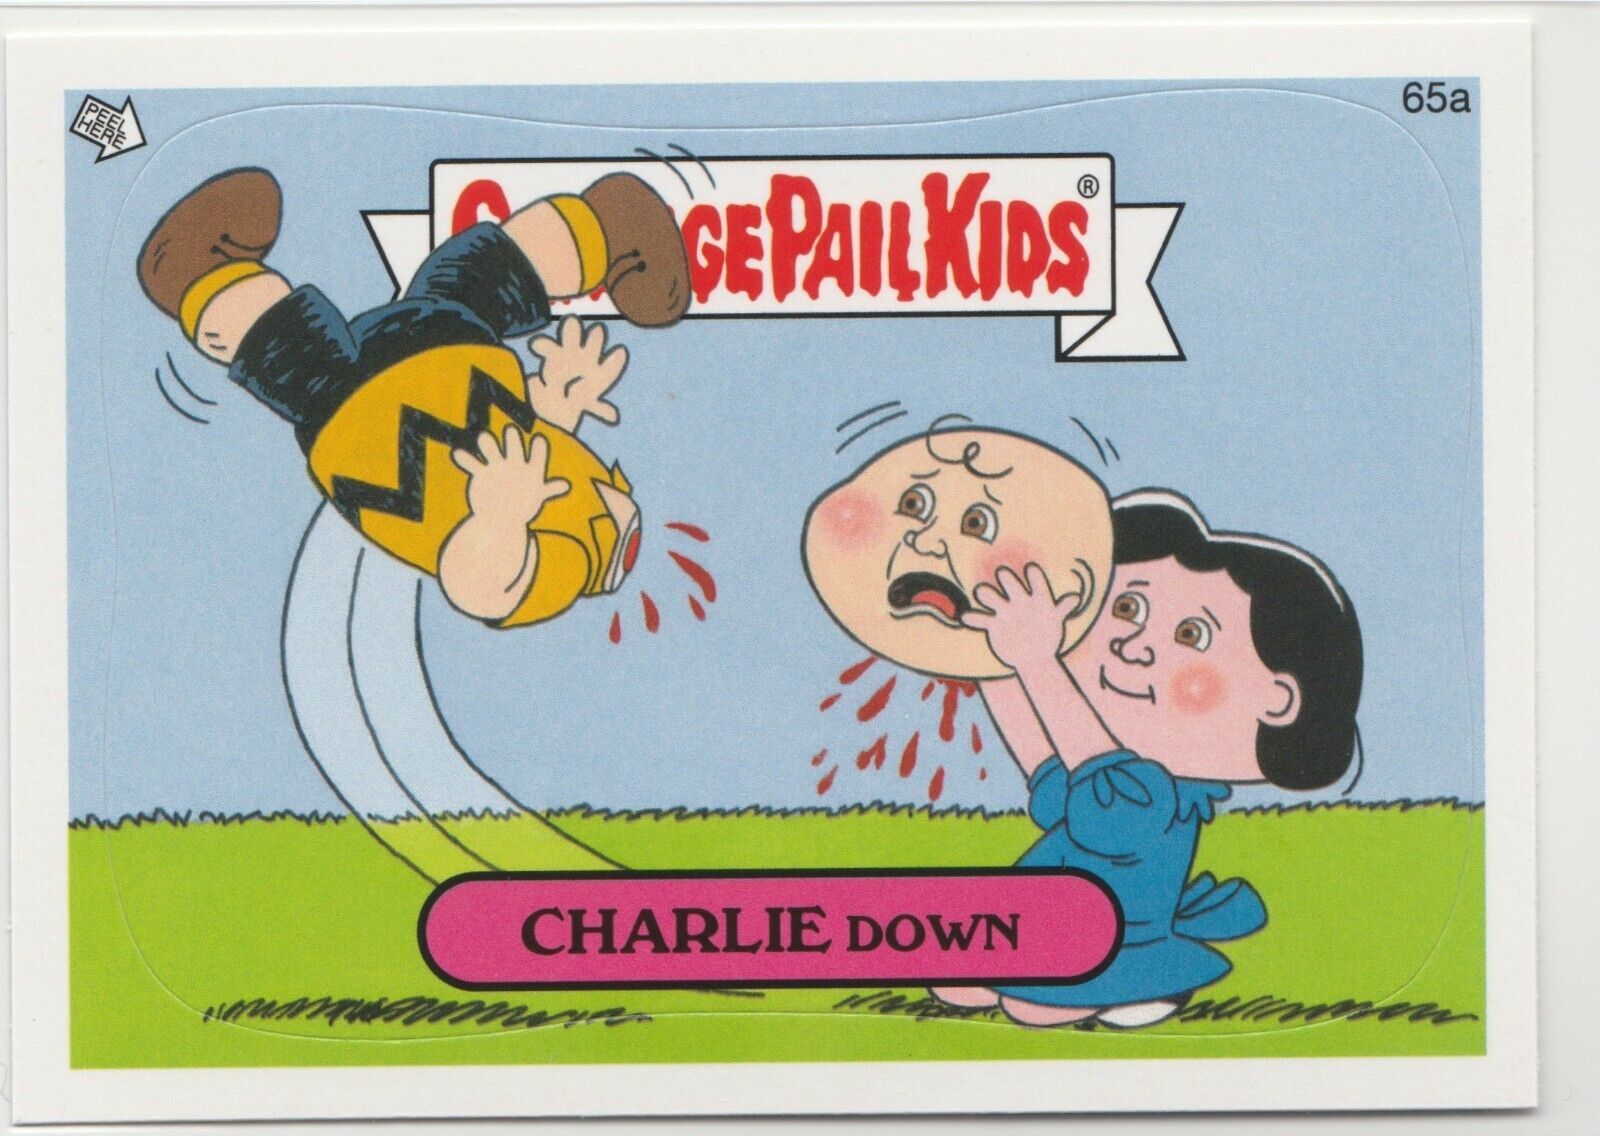 2013 Garbage Pail Kids Brand New Series 2 #65a Charlie Down GPK Peanuts